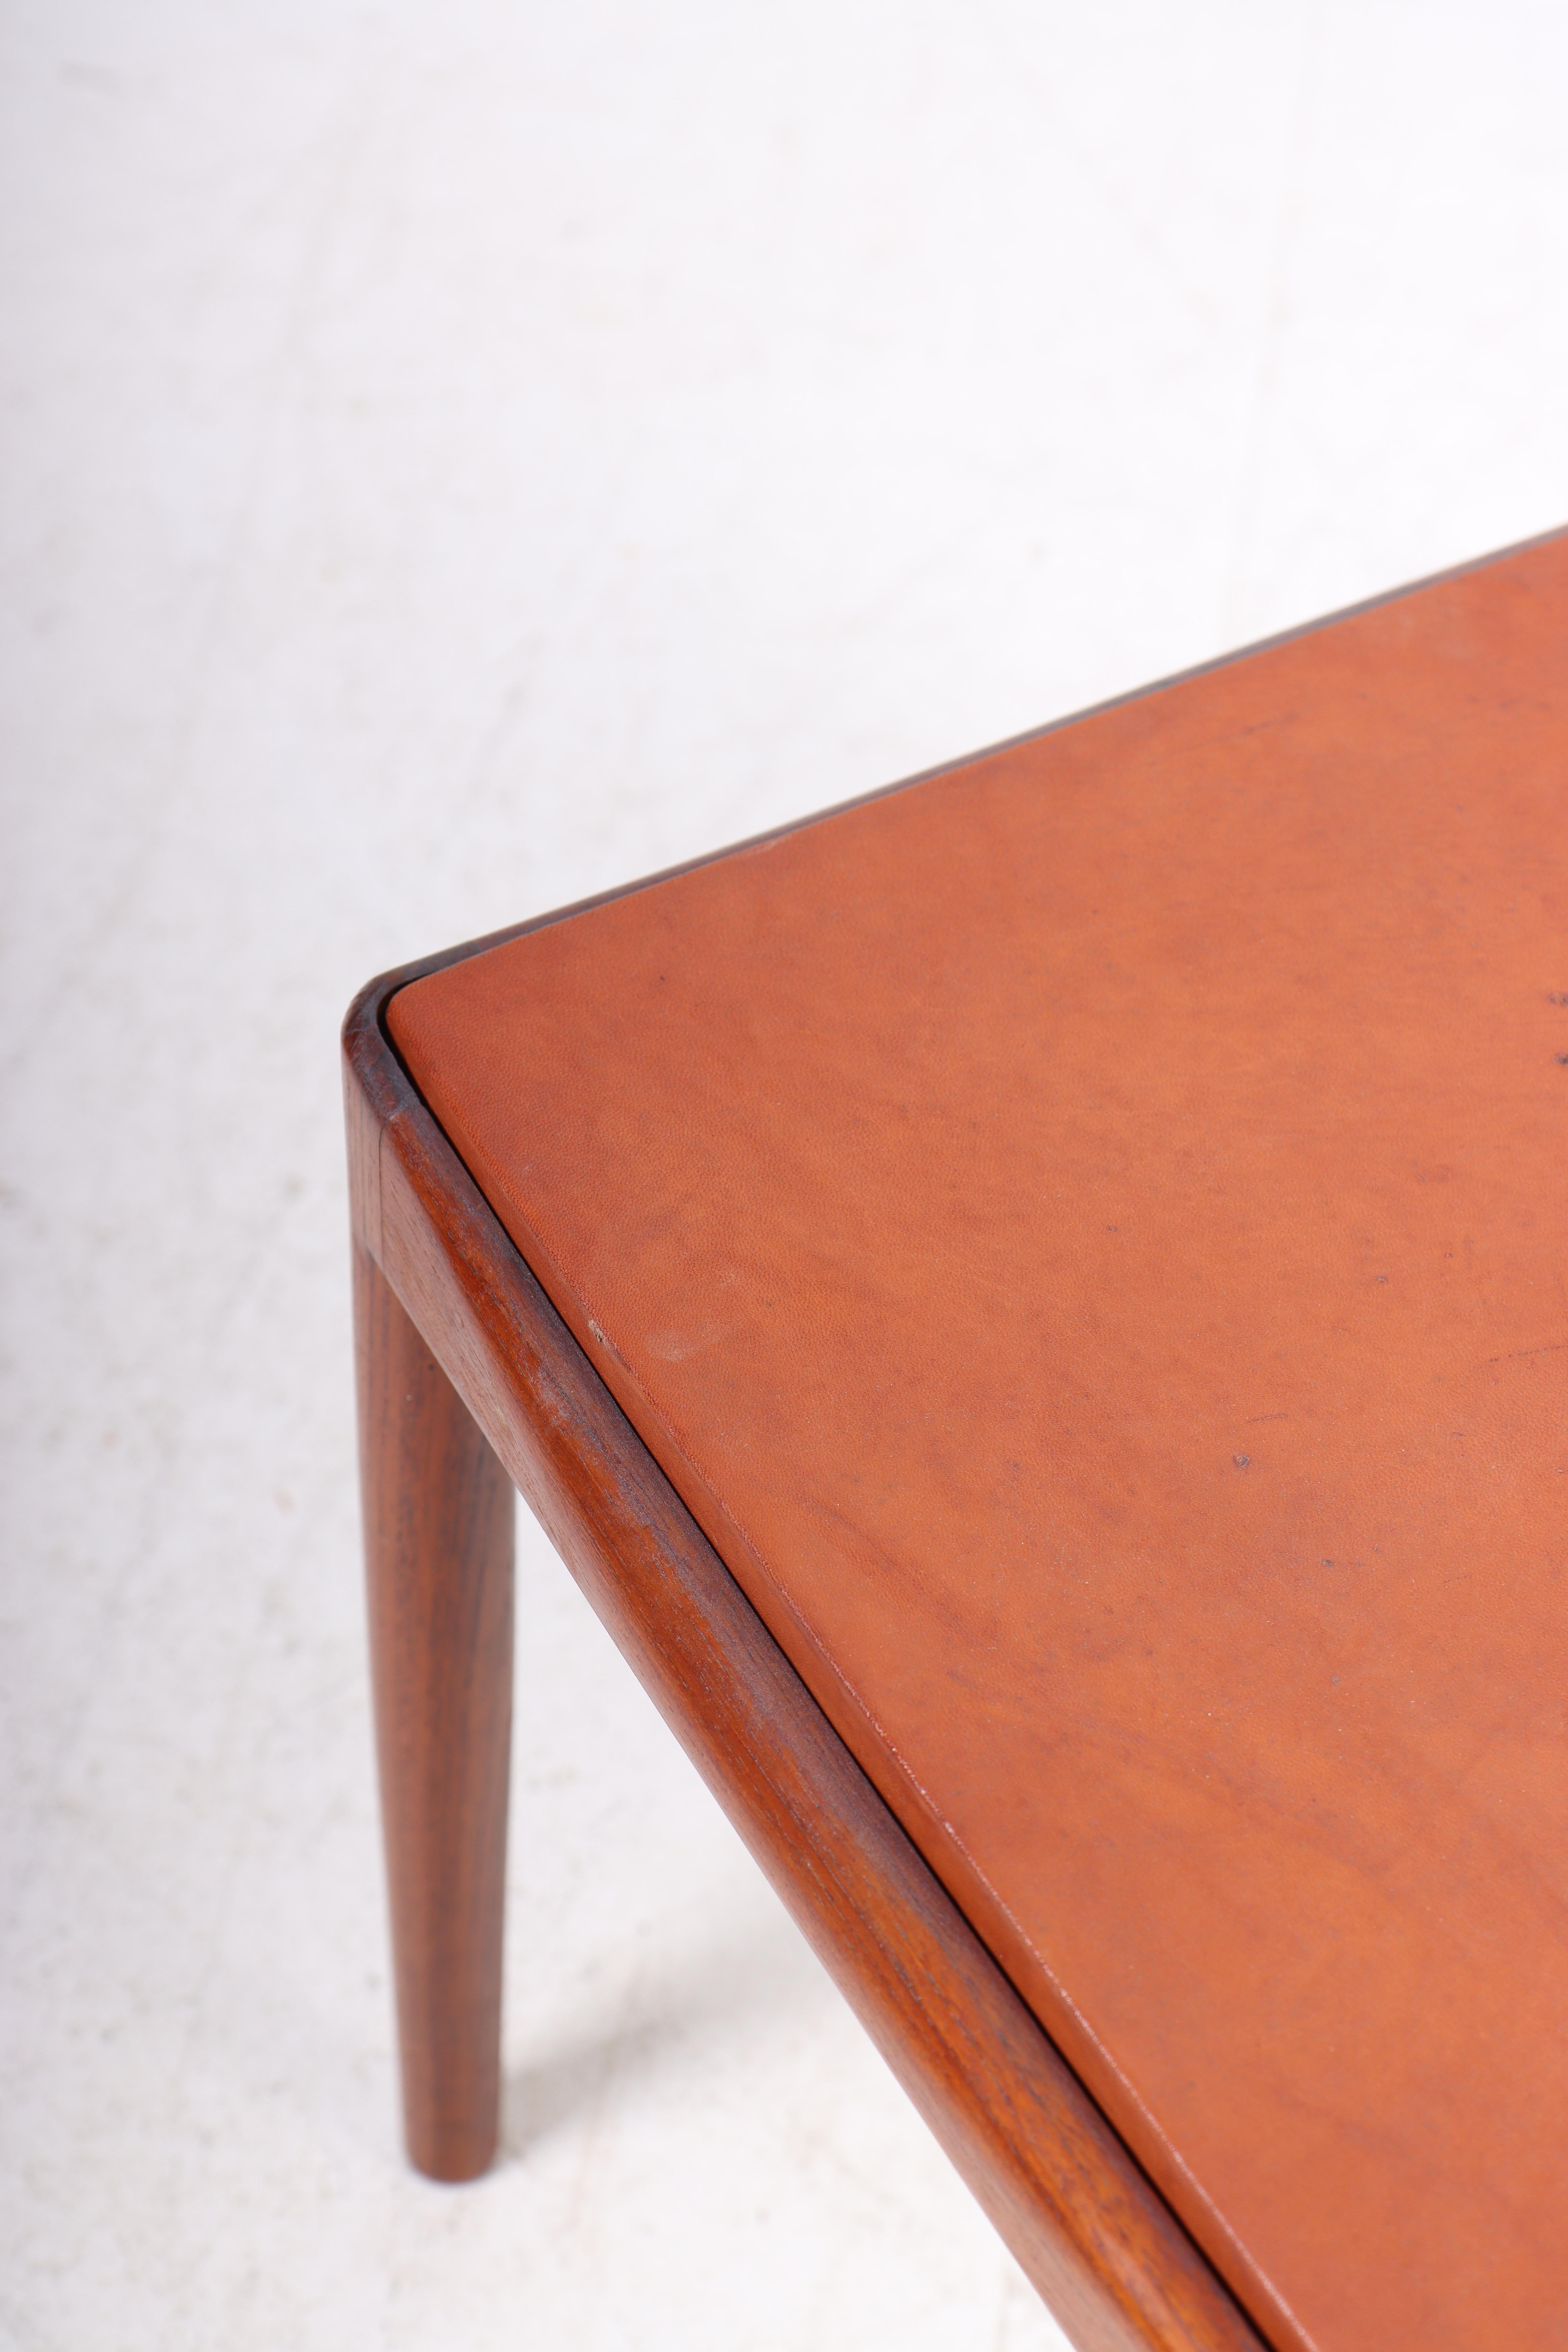 Scandinavian Modern Rare Side Table in Teak and Leather by Ejner Larsen & Aksel Bender Madsen For Sale